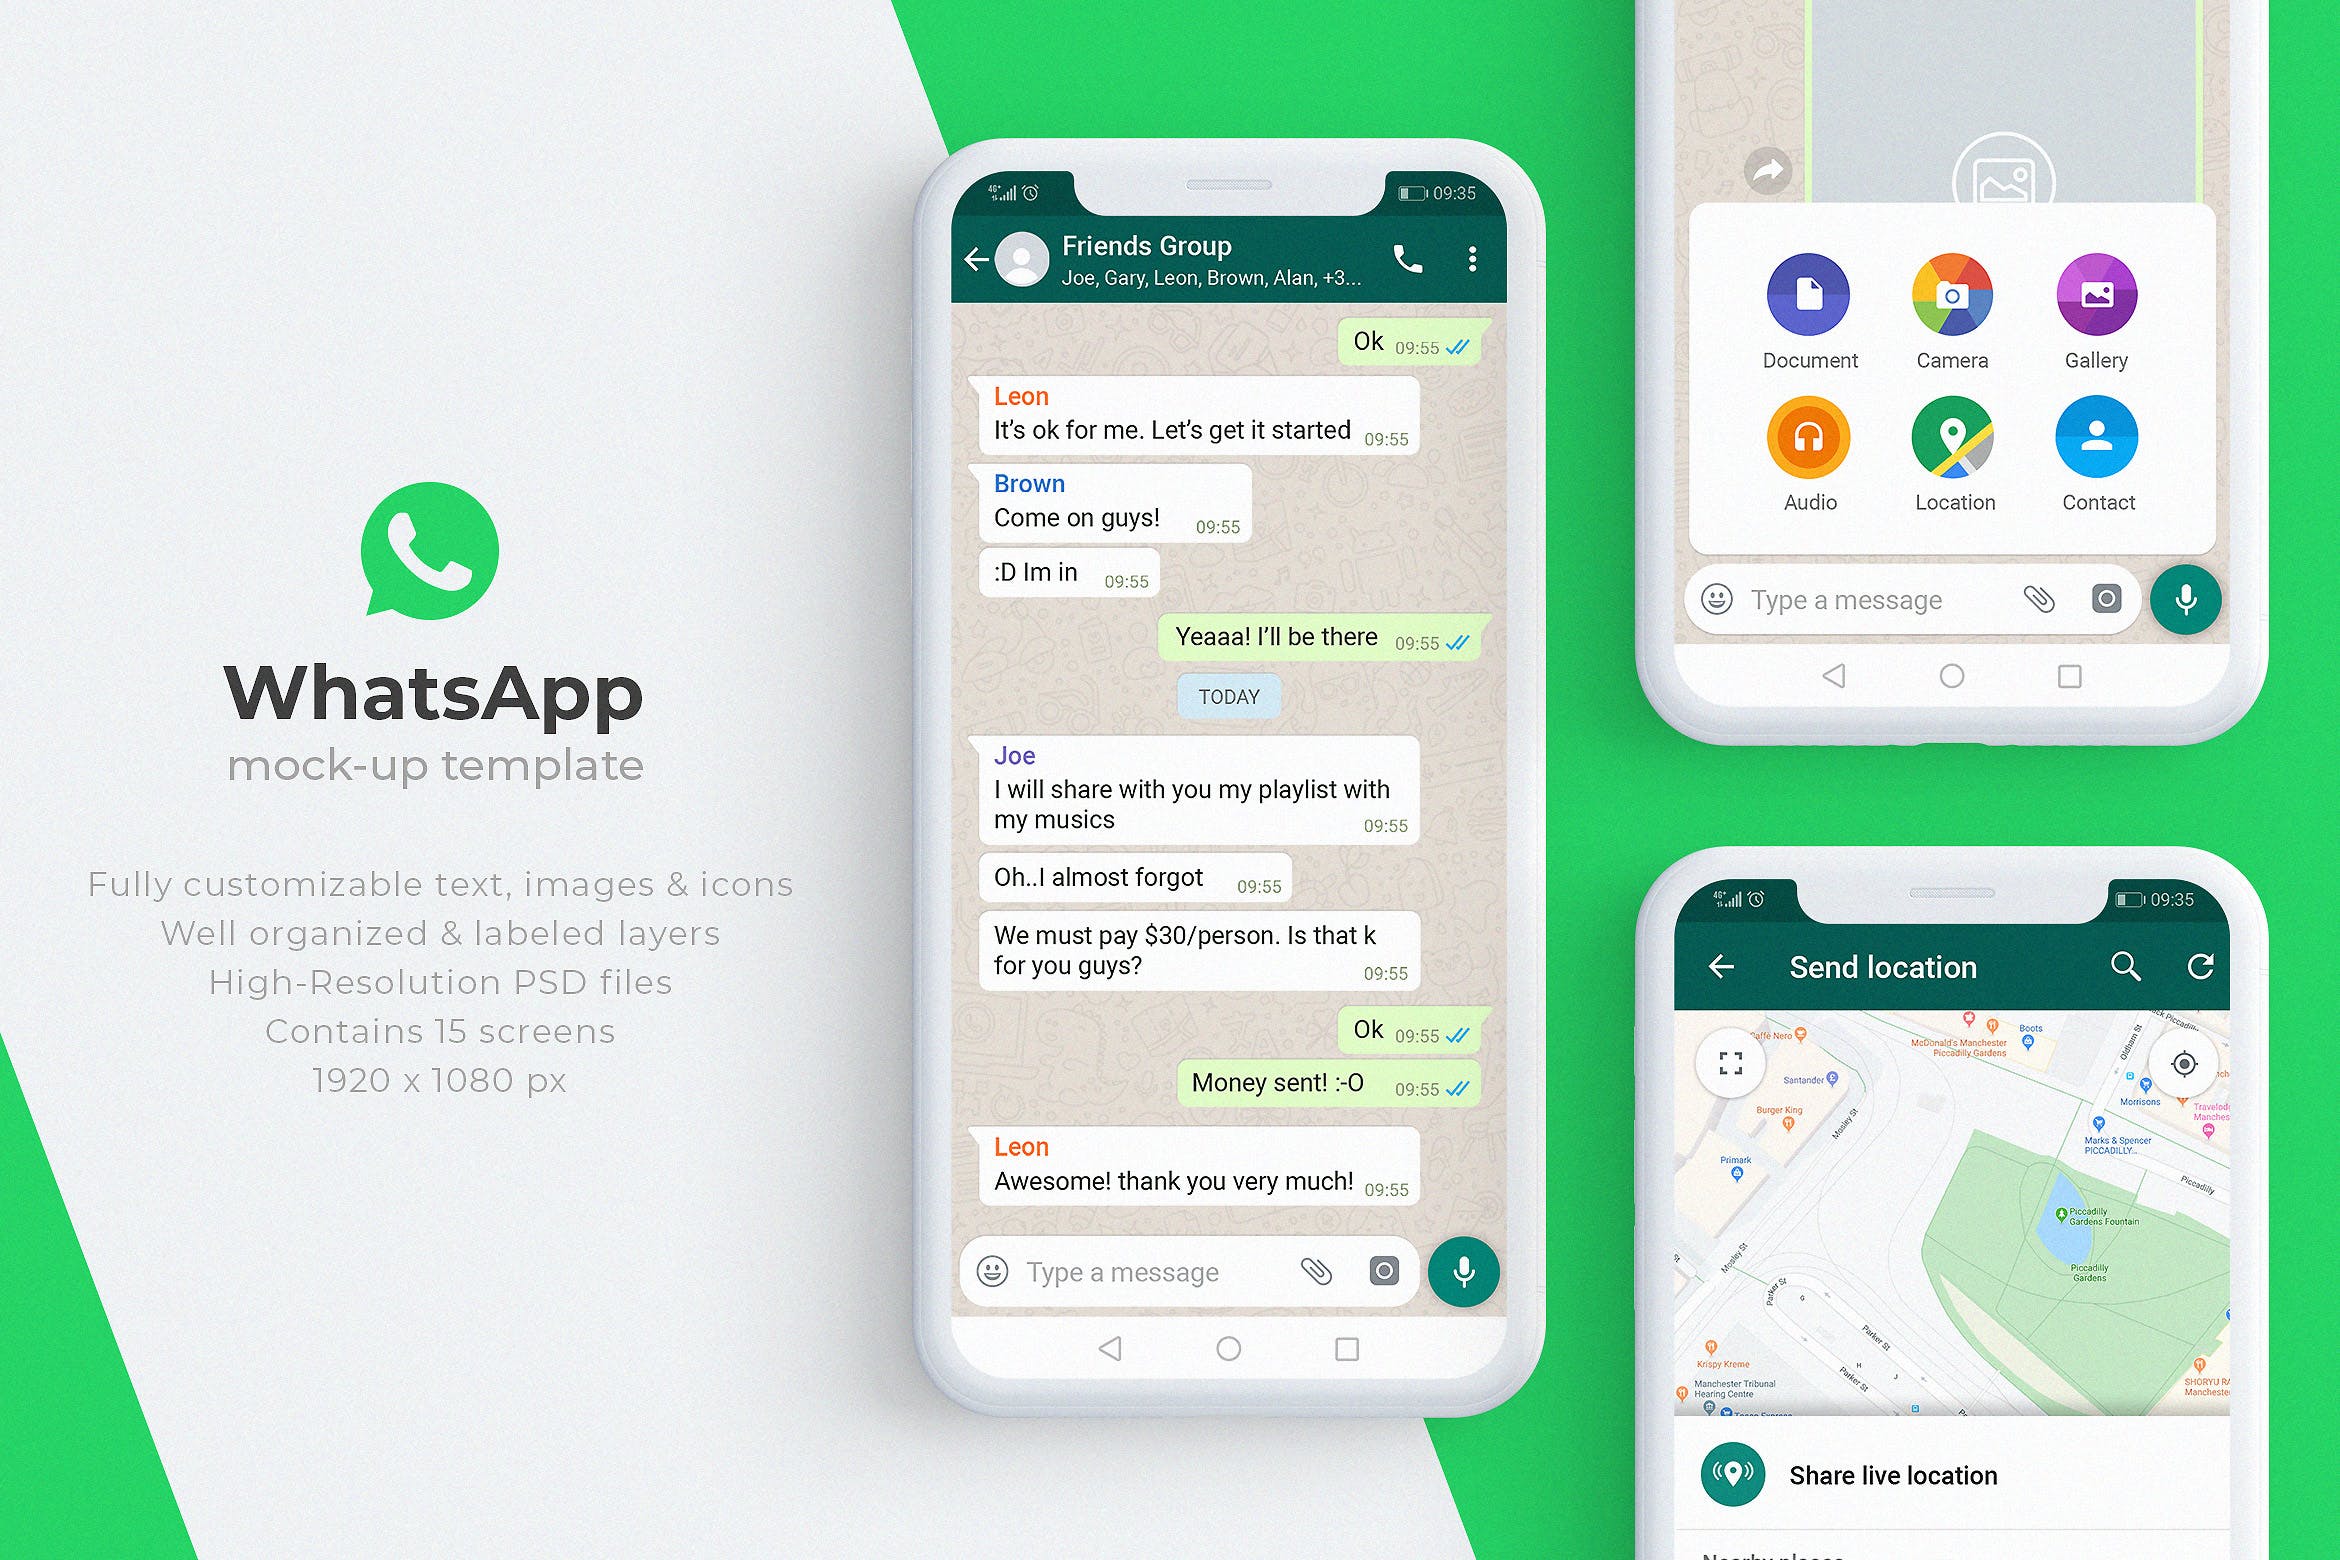 WhatsApp应用界面设计展示第一素材精选样机模板 WhatsApp Mock-Up Template插图